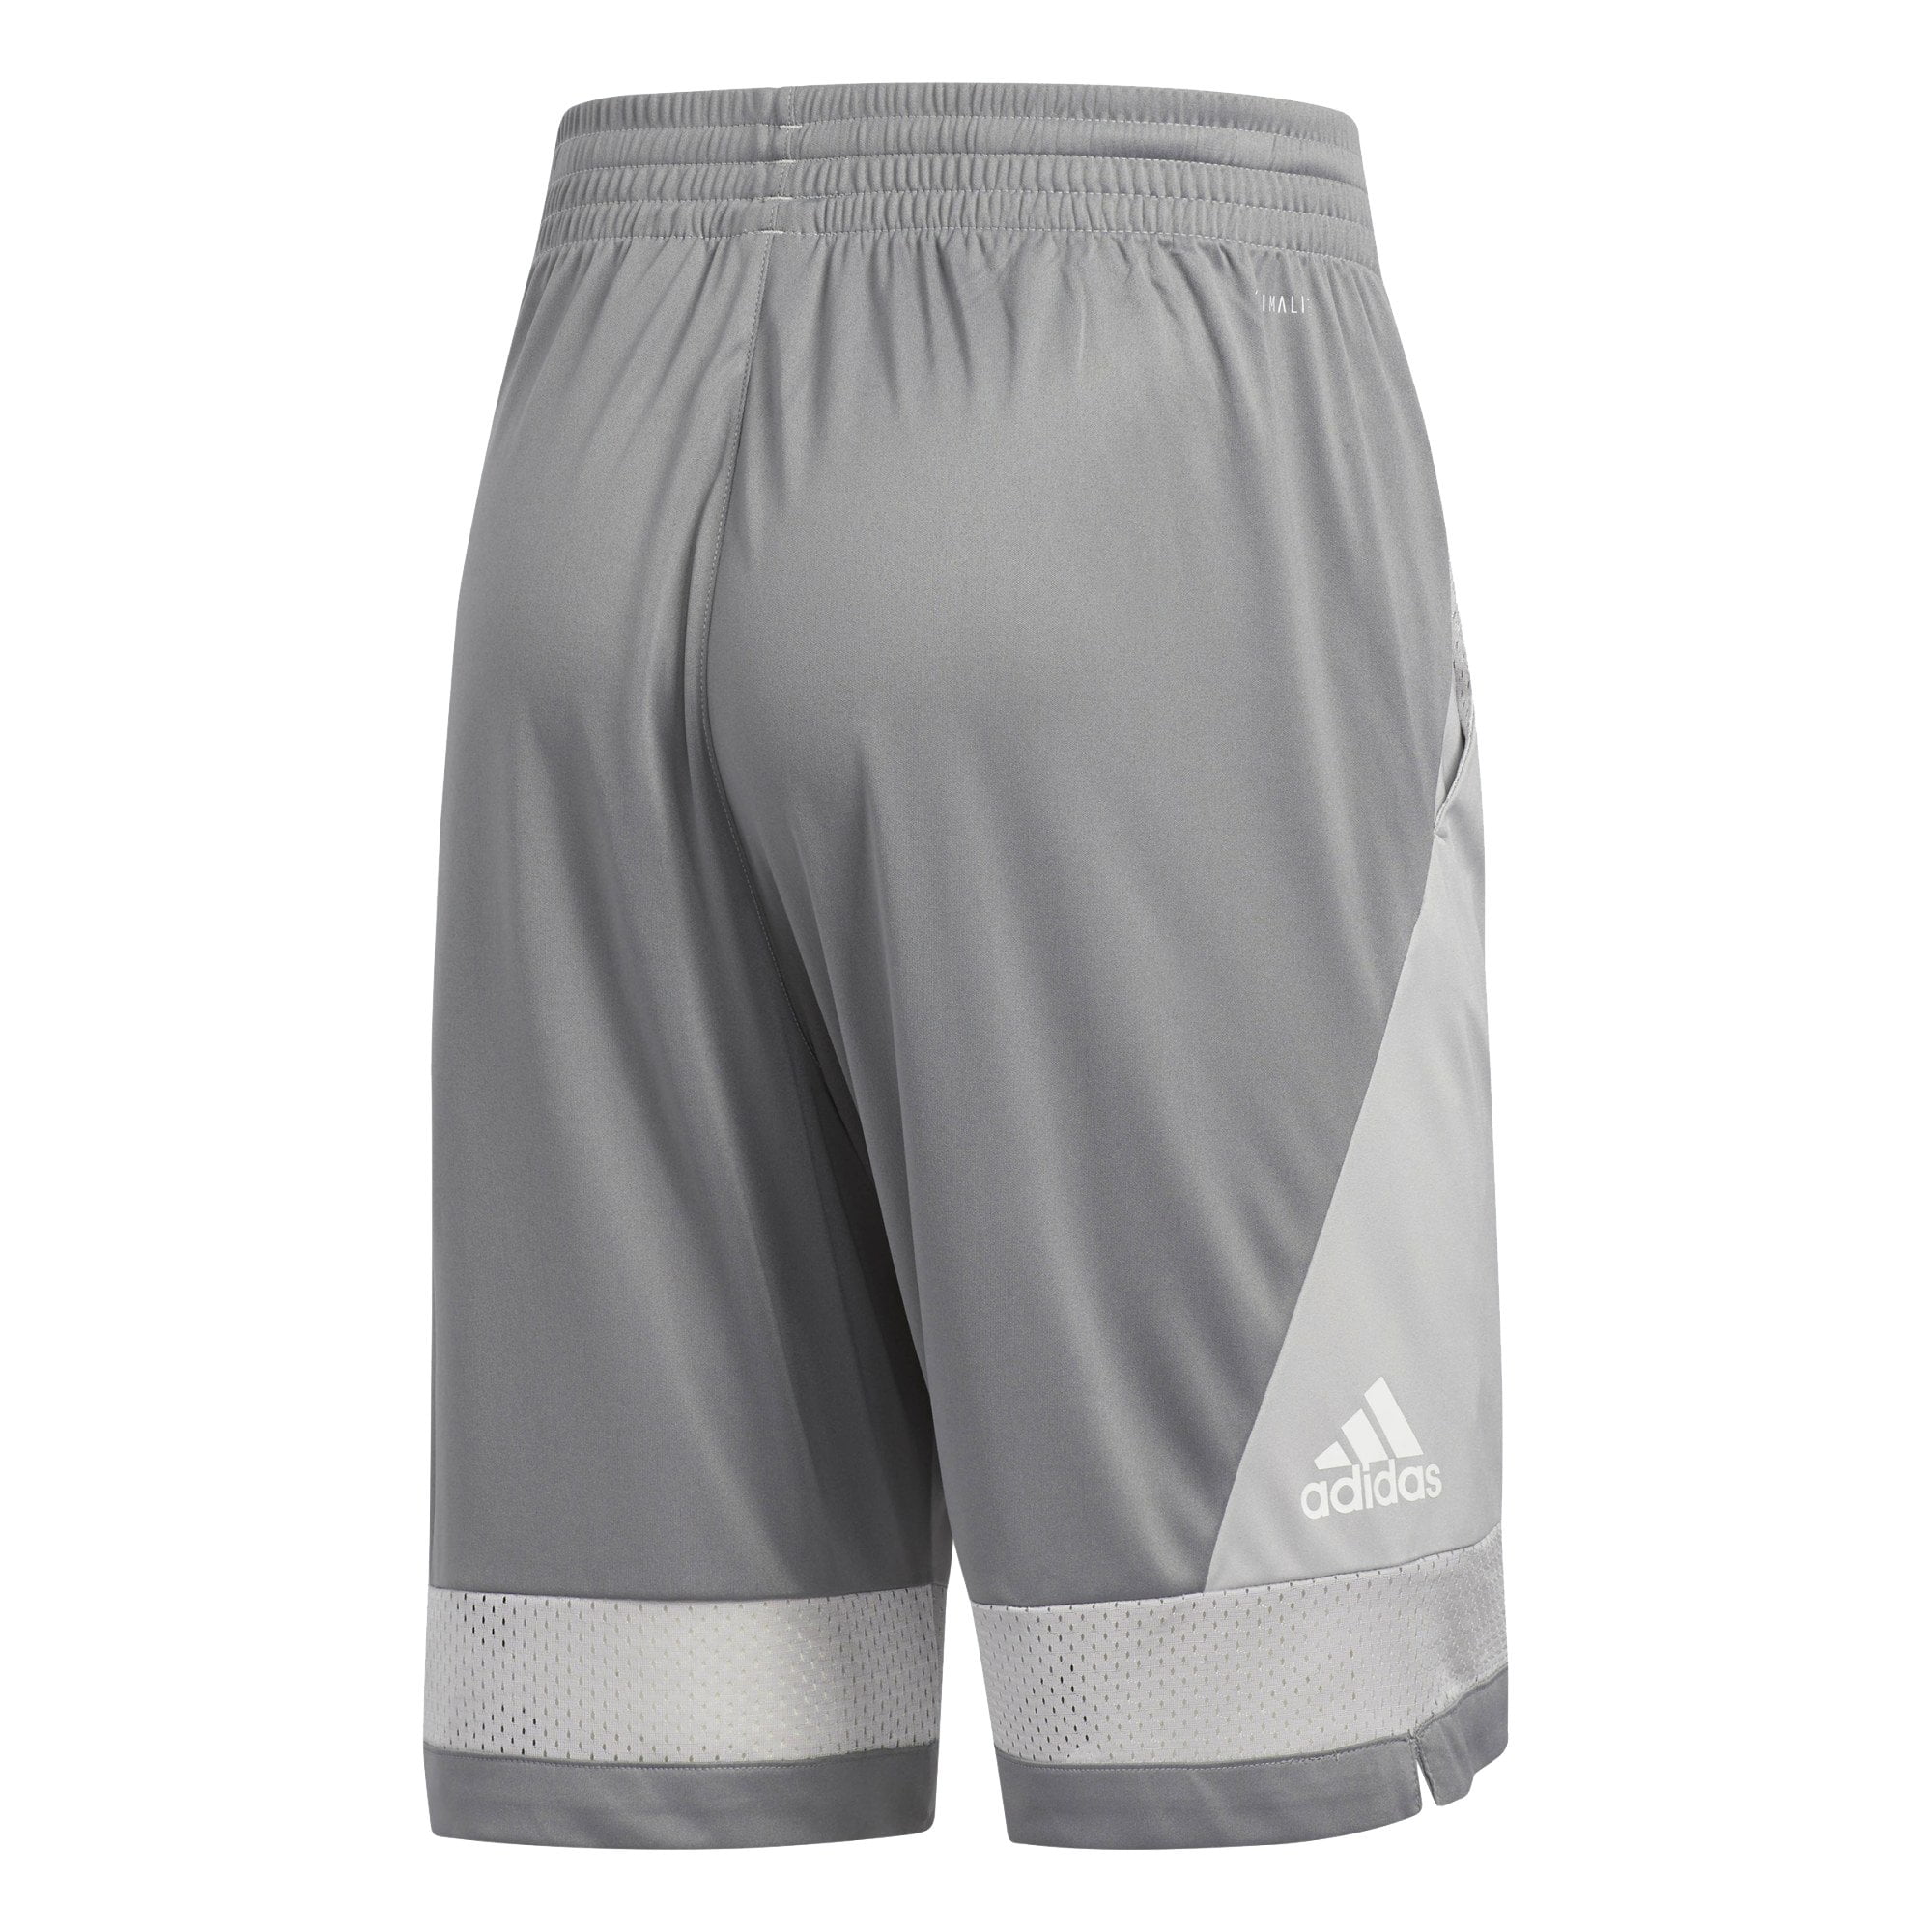 adidas men's pro bounce basketball shorts - Walmart.com